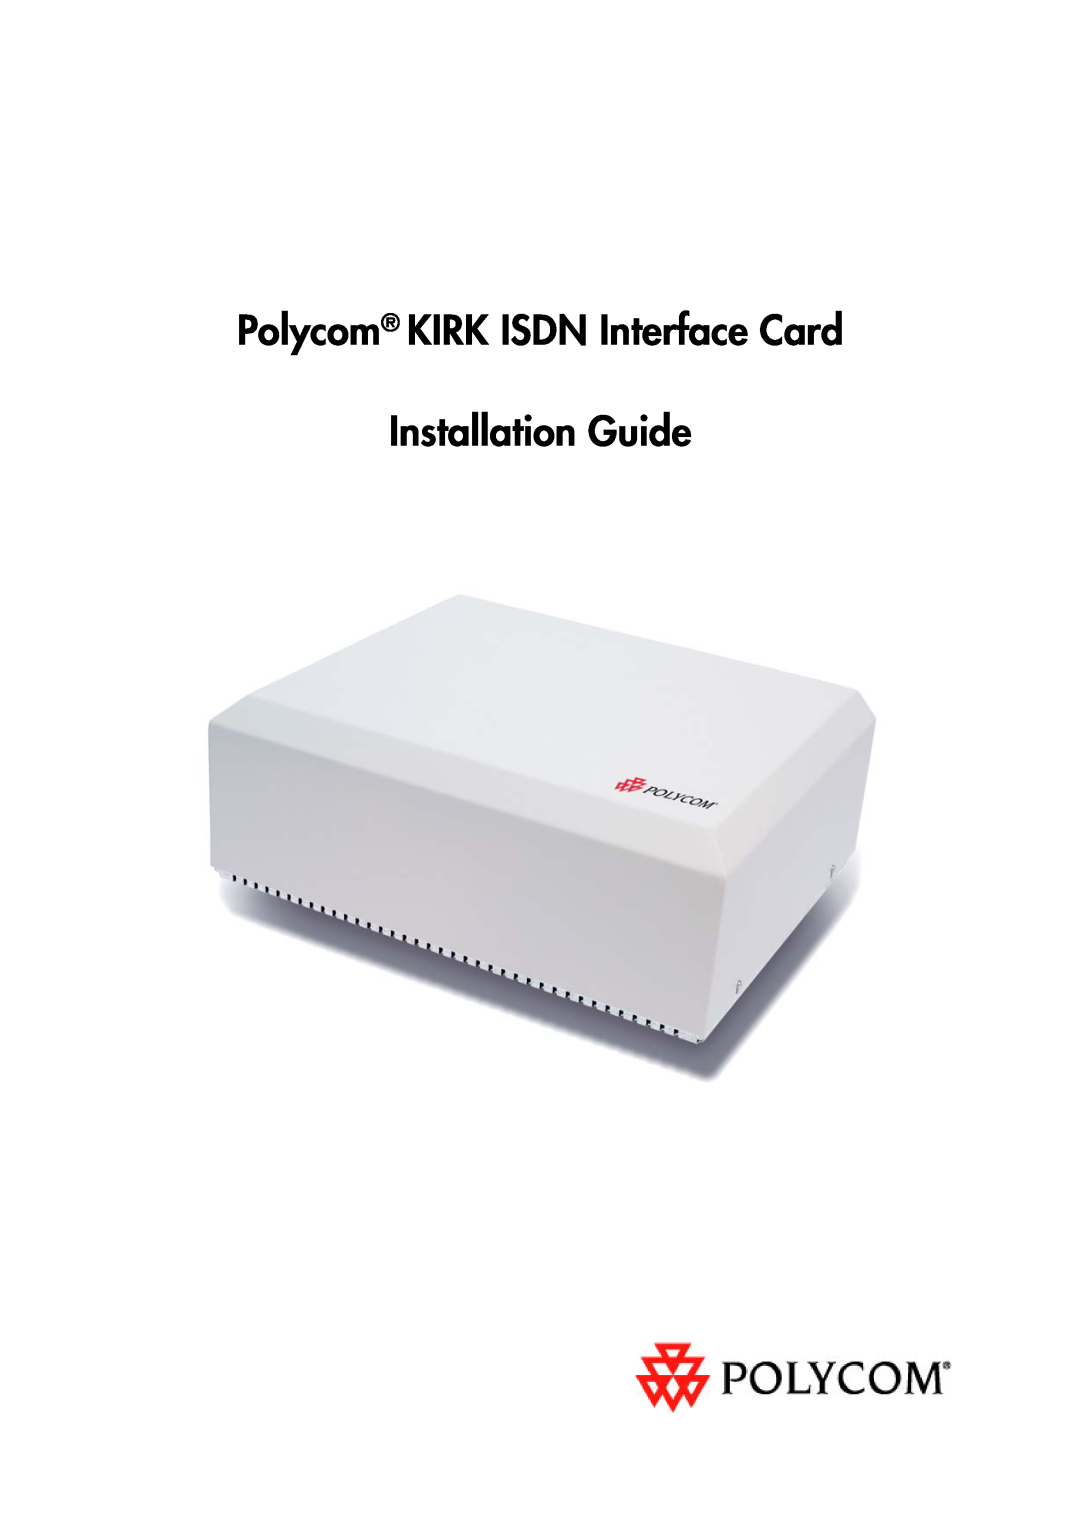 Polycom KIRK ISDN NET5 manual Polycom KIRK ISDN Interface Card, Installation Guide 